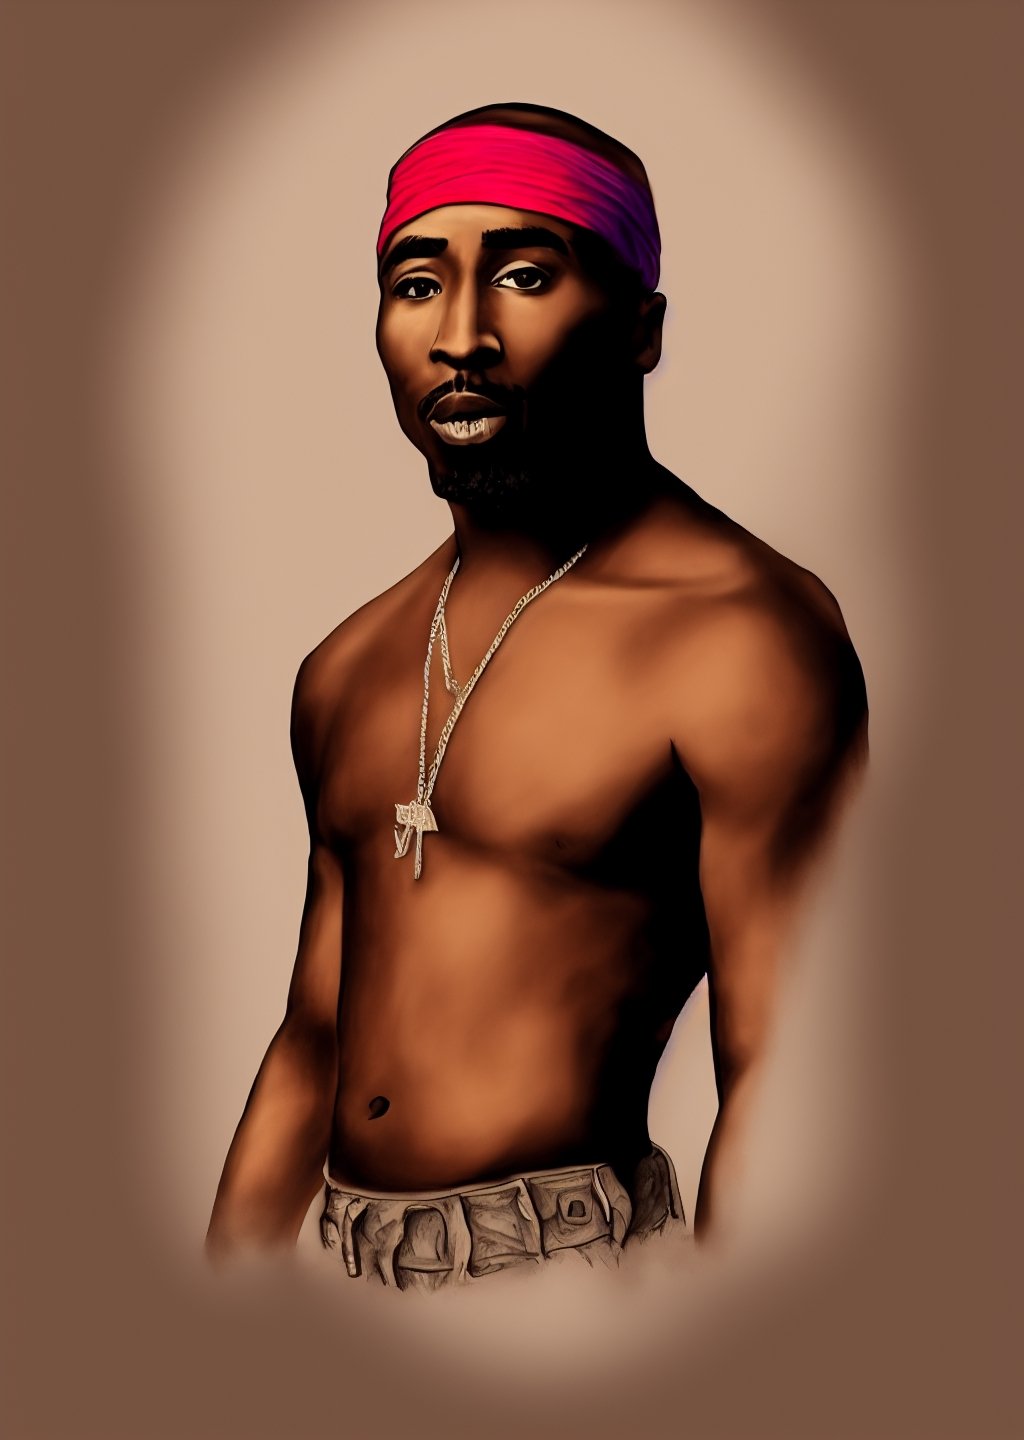 ,Tupac portrait, 4k, 8k, intricate details, mood, soft shading